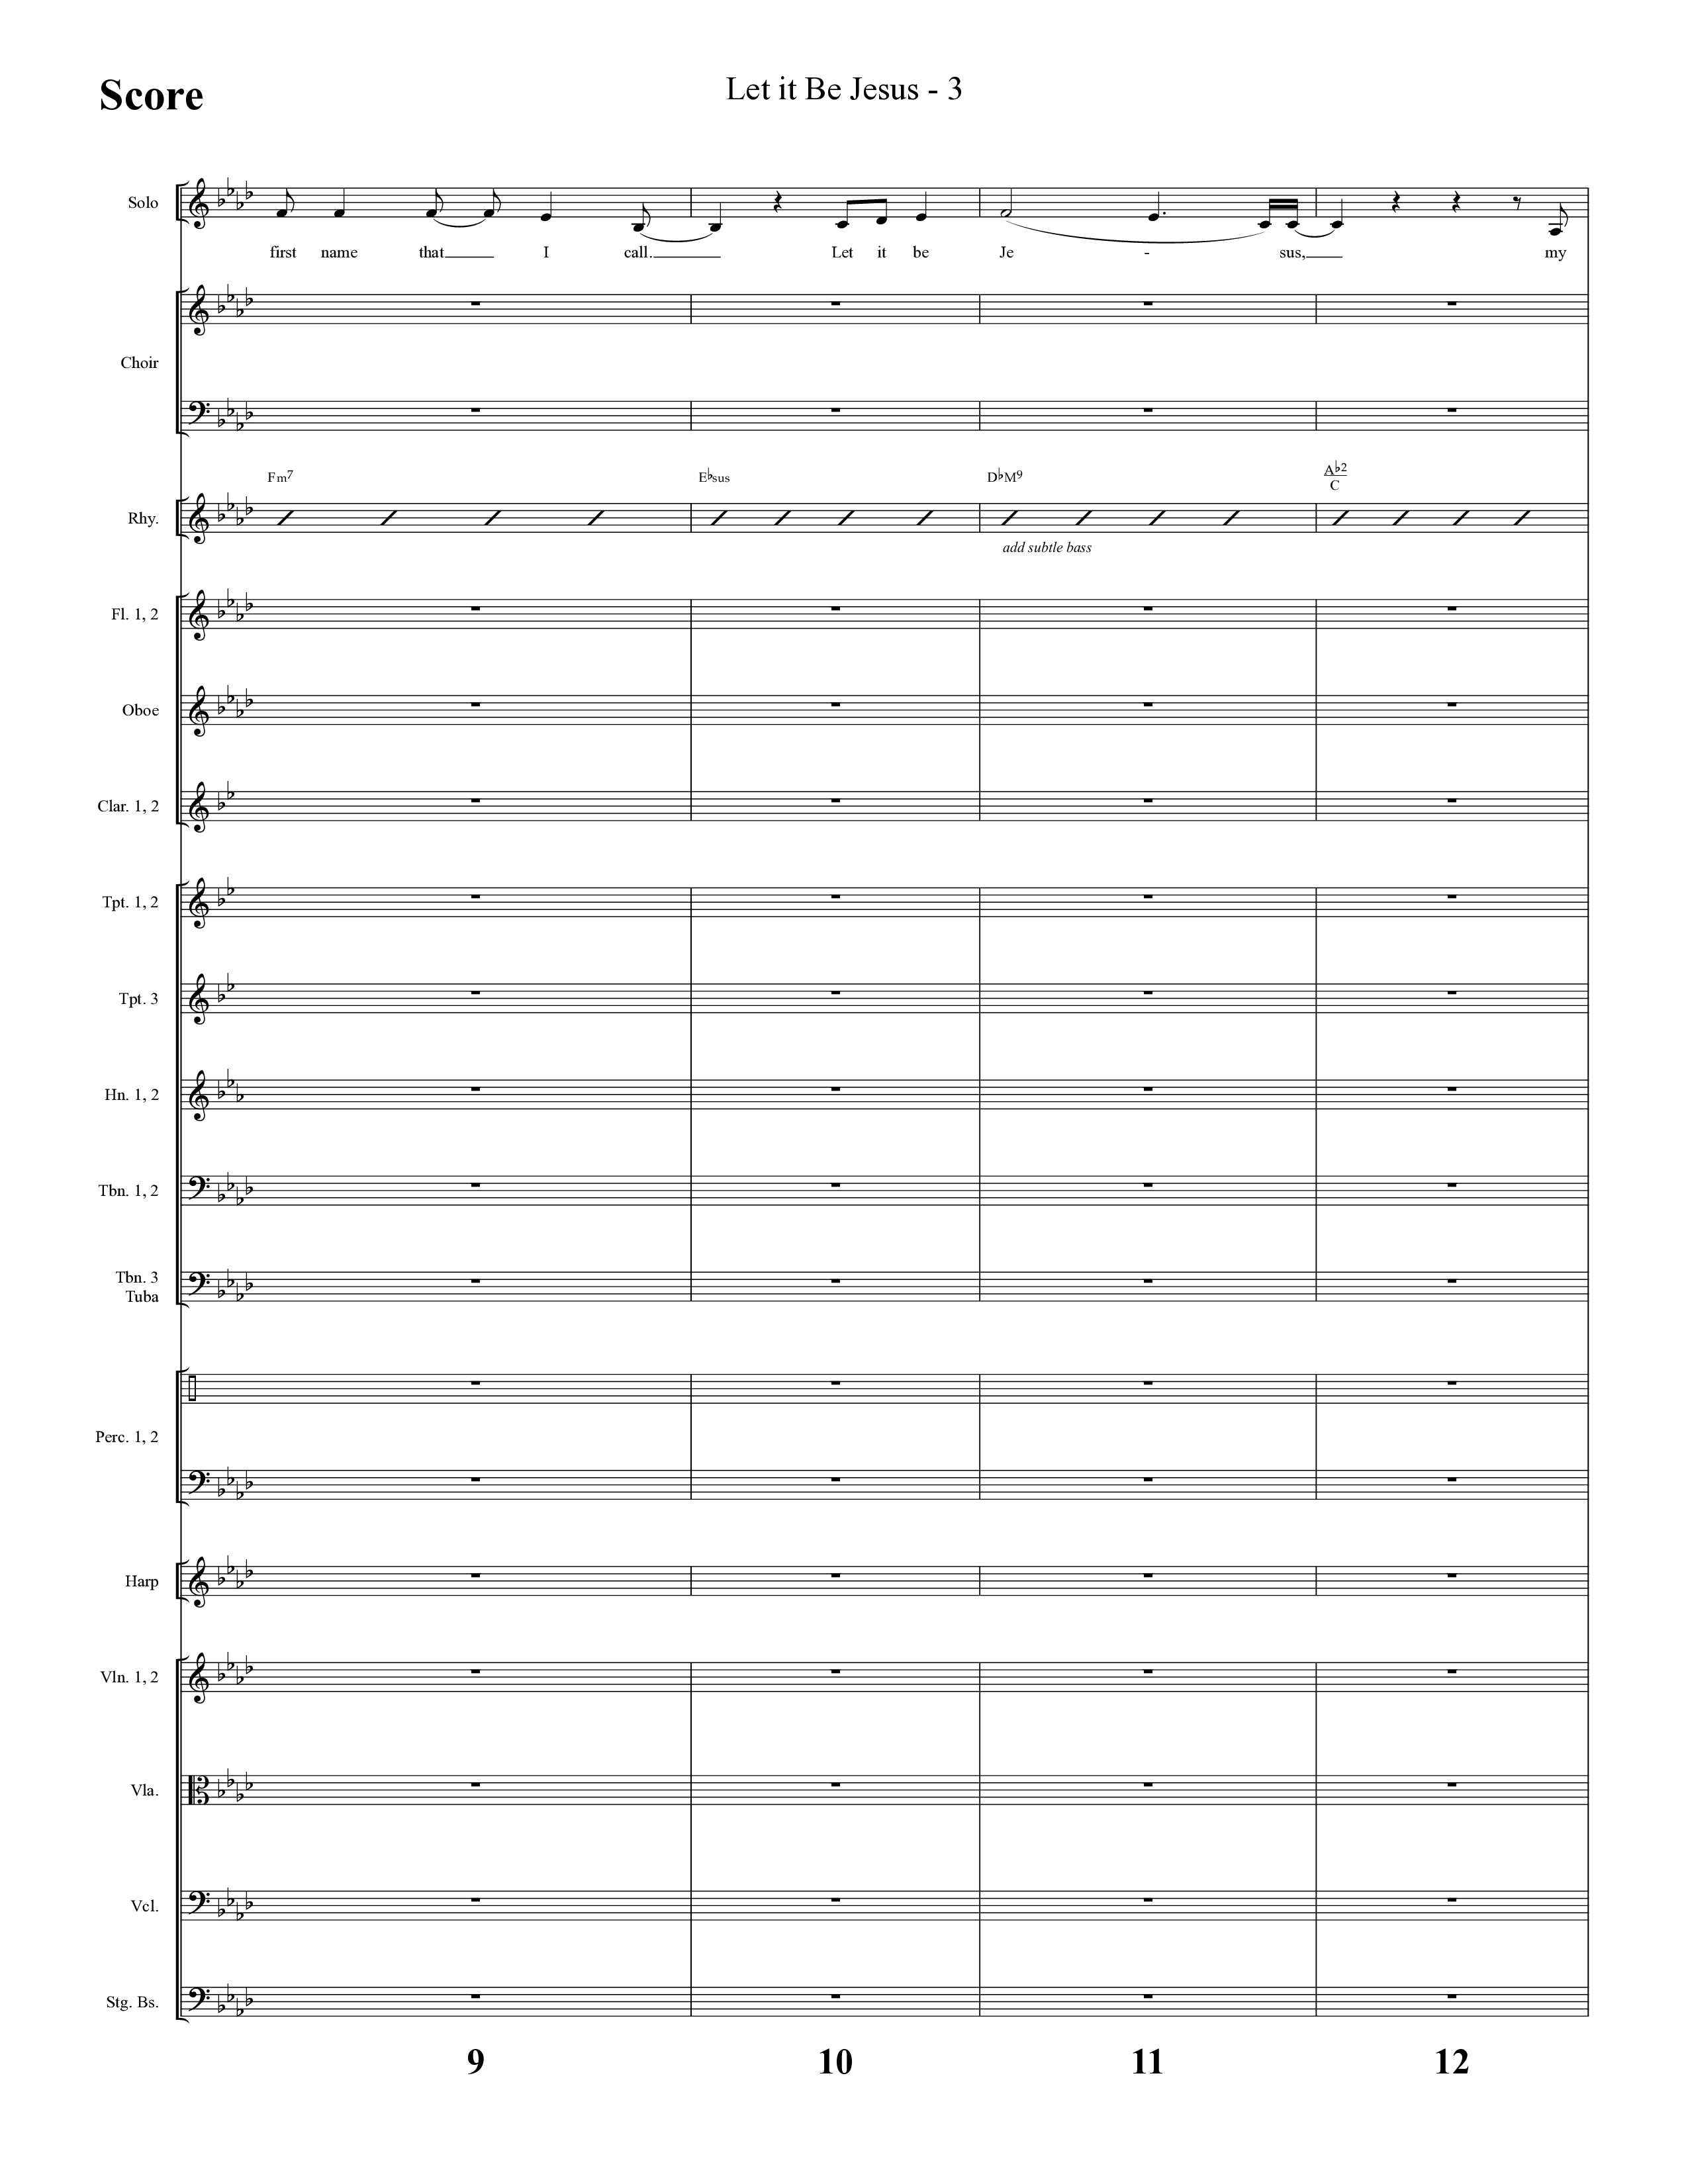 Let It Be Jesus (Choral Anthem SATB) Orchestration (Lifeway Choral / Arr. Cliff Duren)